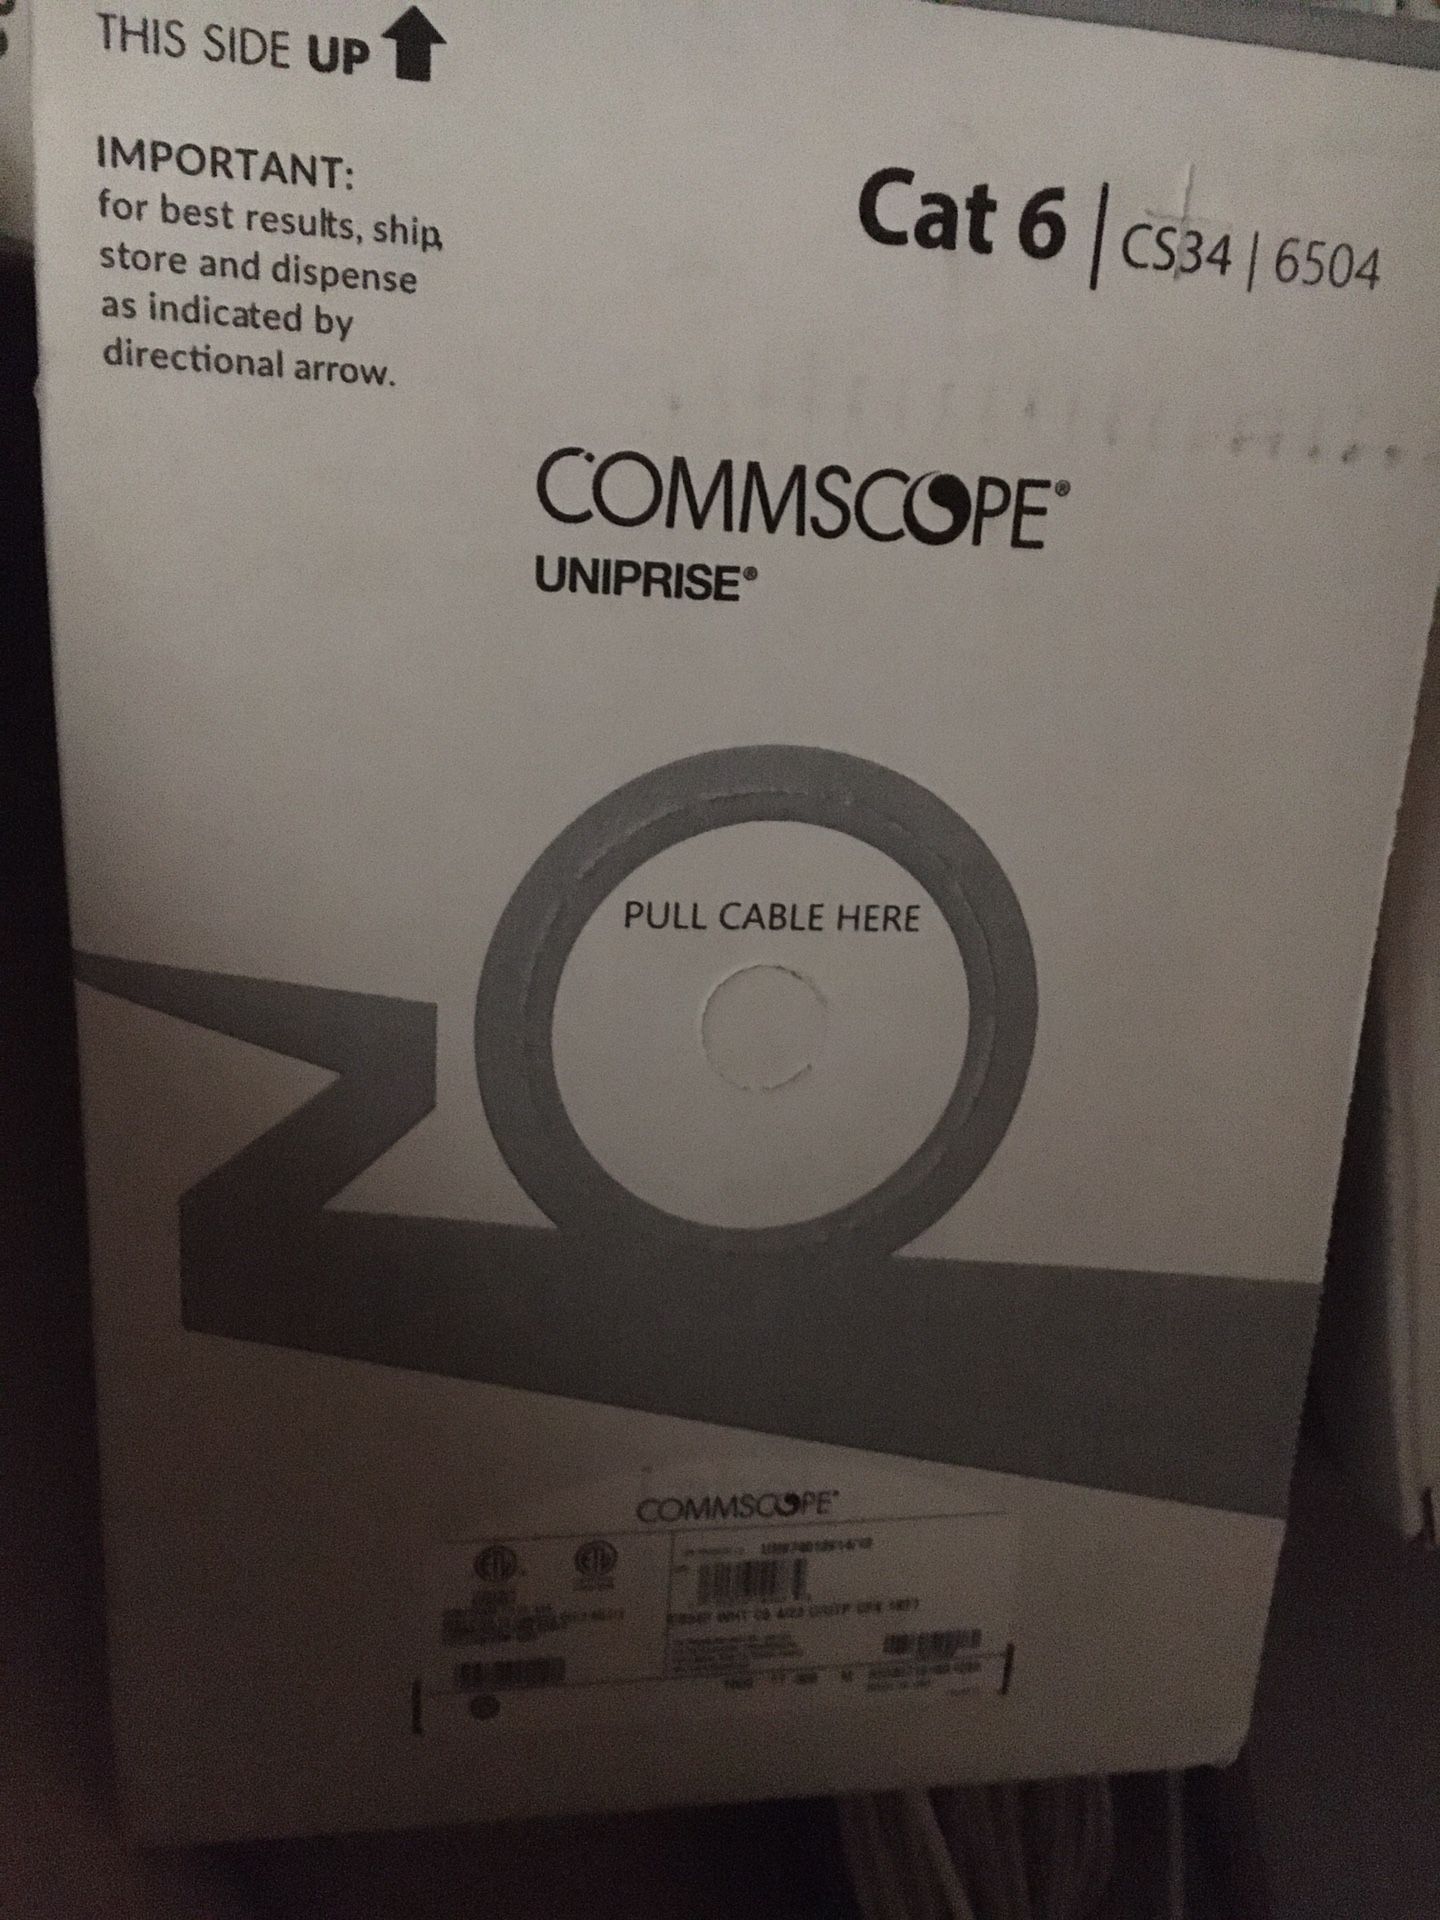 Commscope cat 6 cable boxes and Berk-Tek cat 6